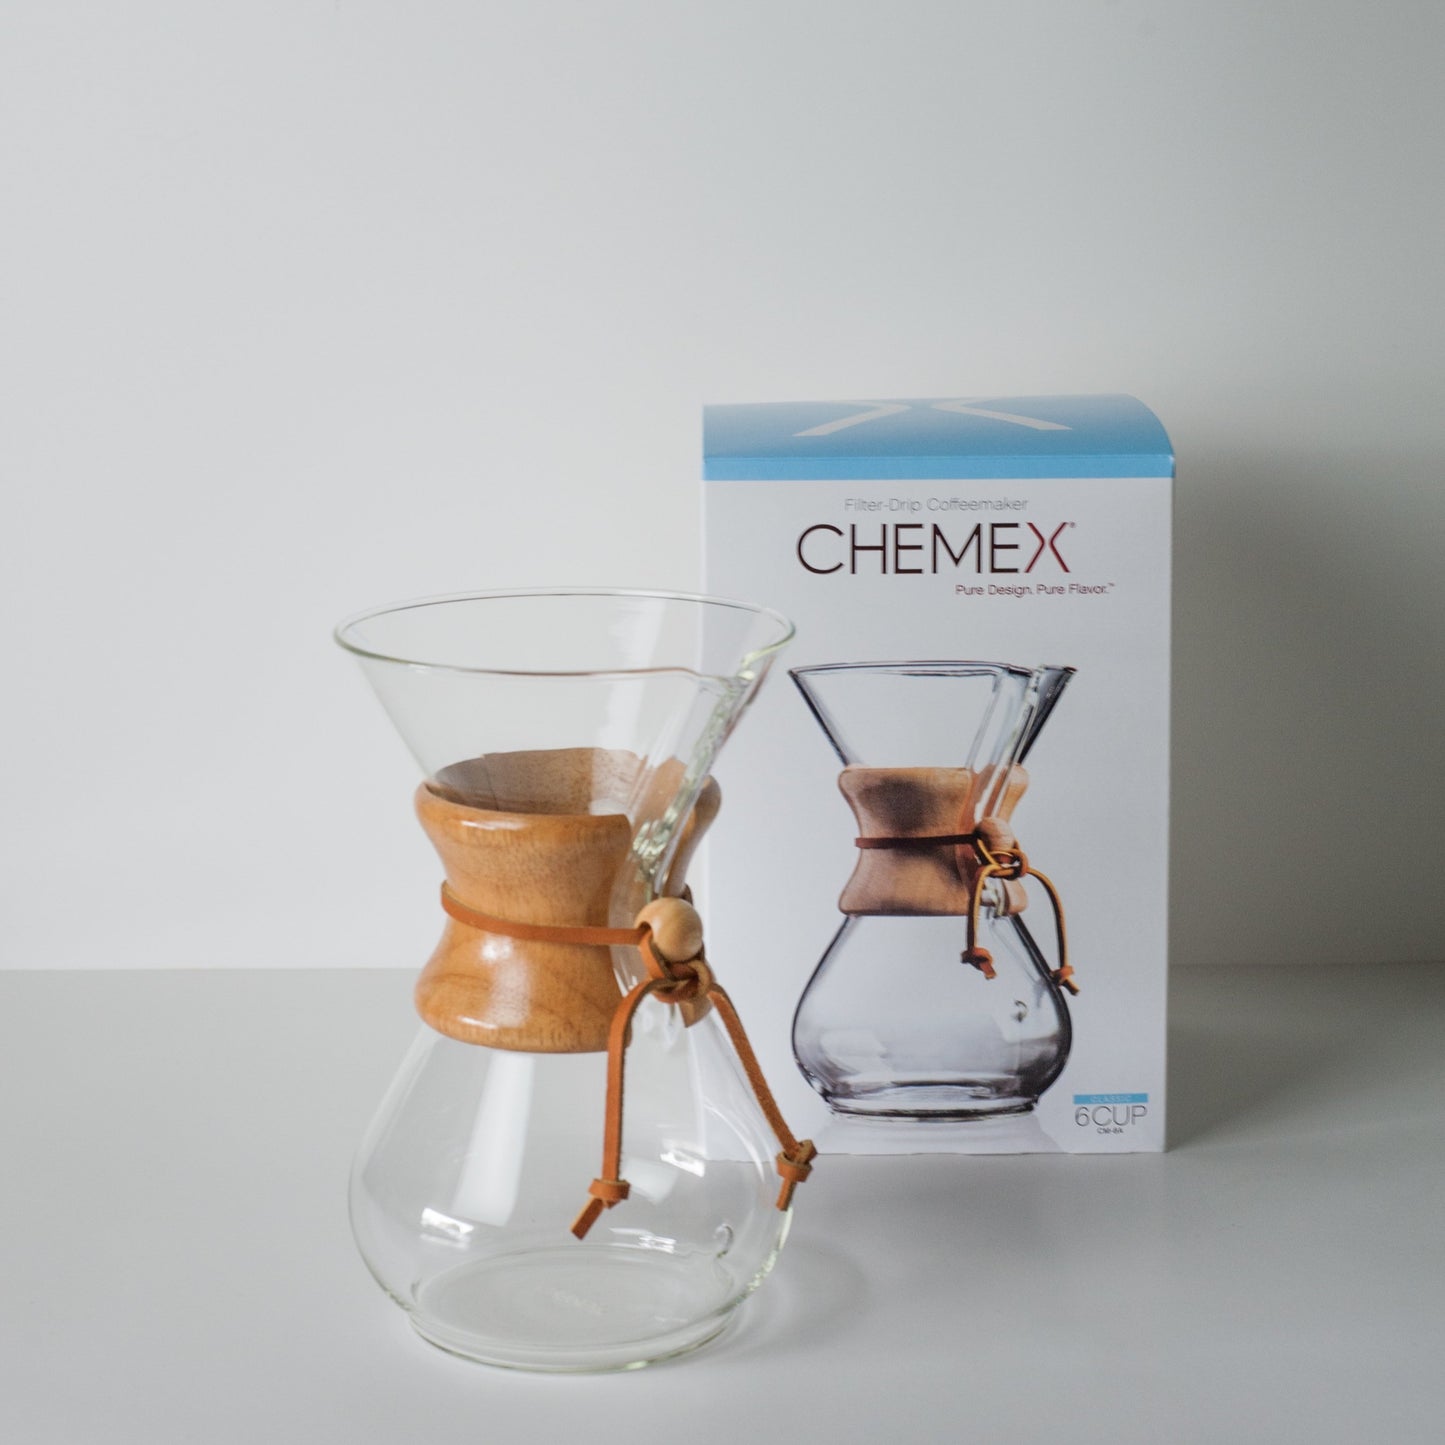 CHEMEX Coffeemaker